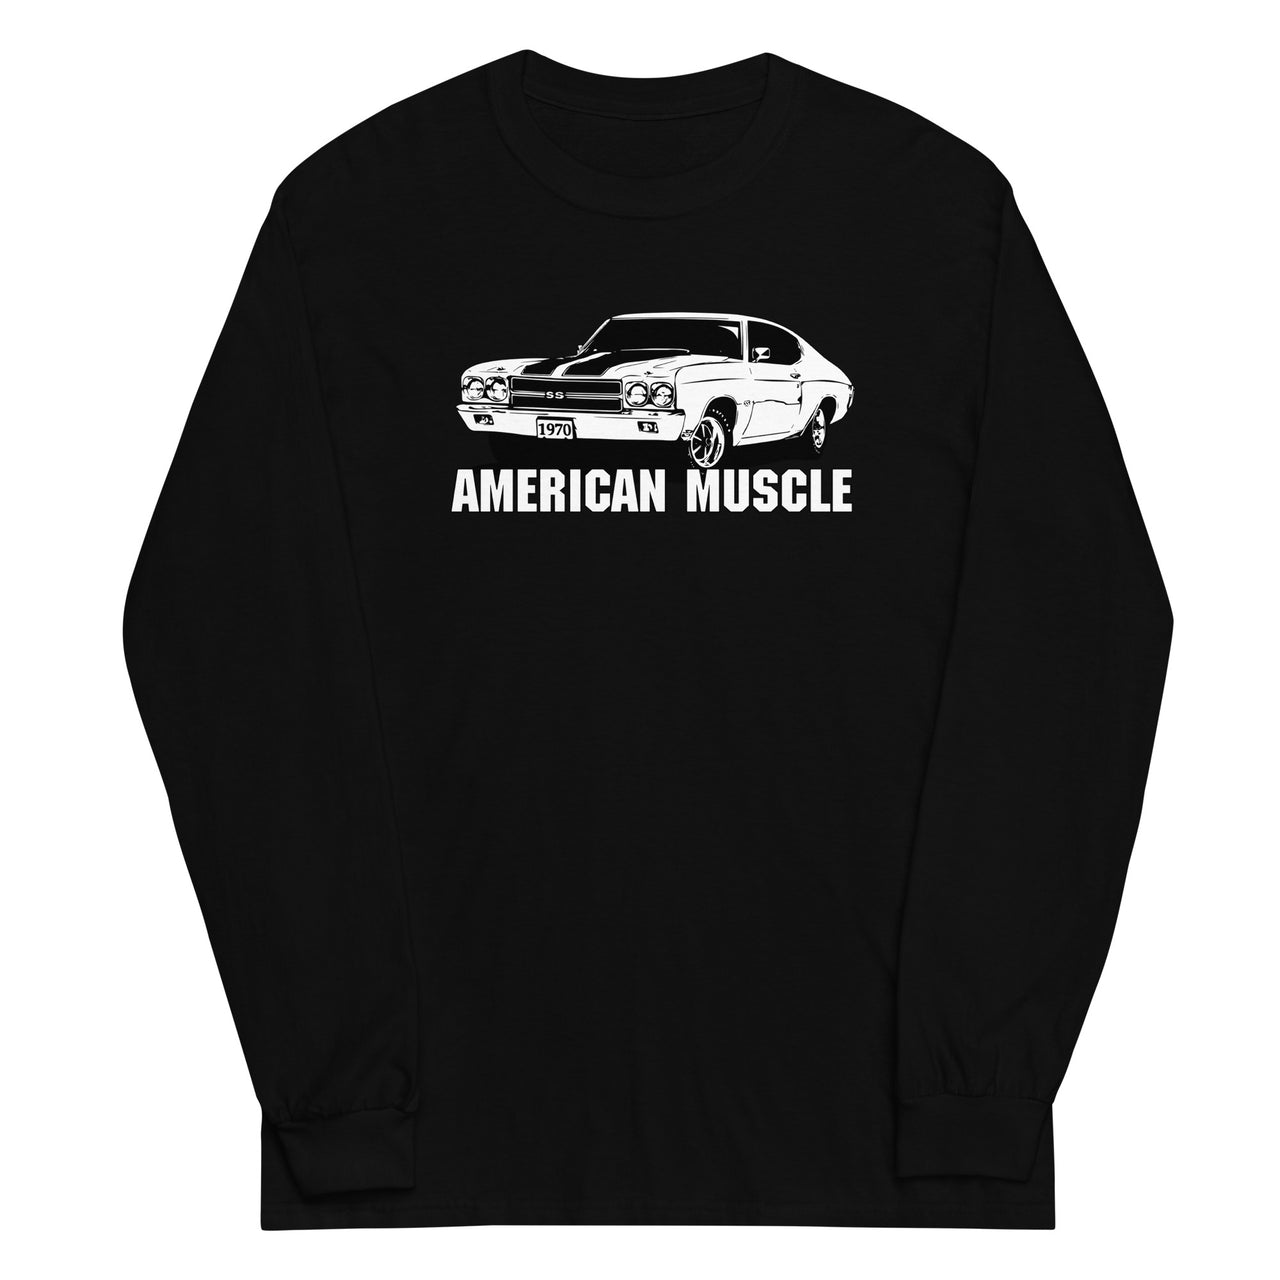 1970 Chevelle Car Long Sleeve T-Shirt in black